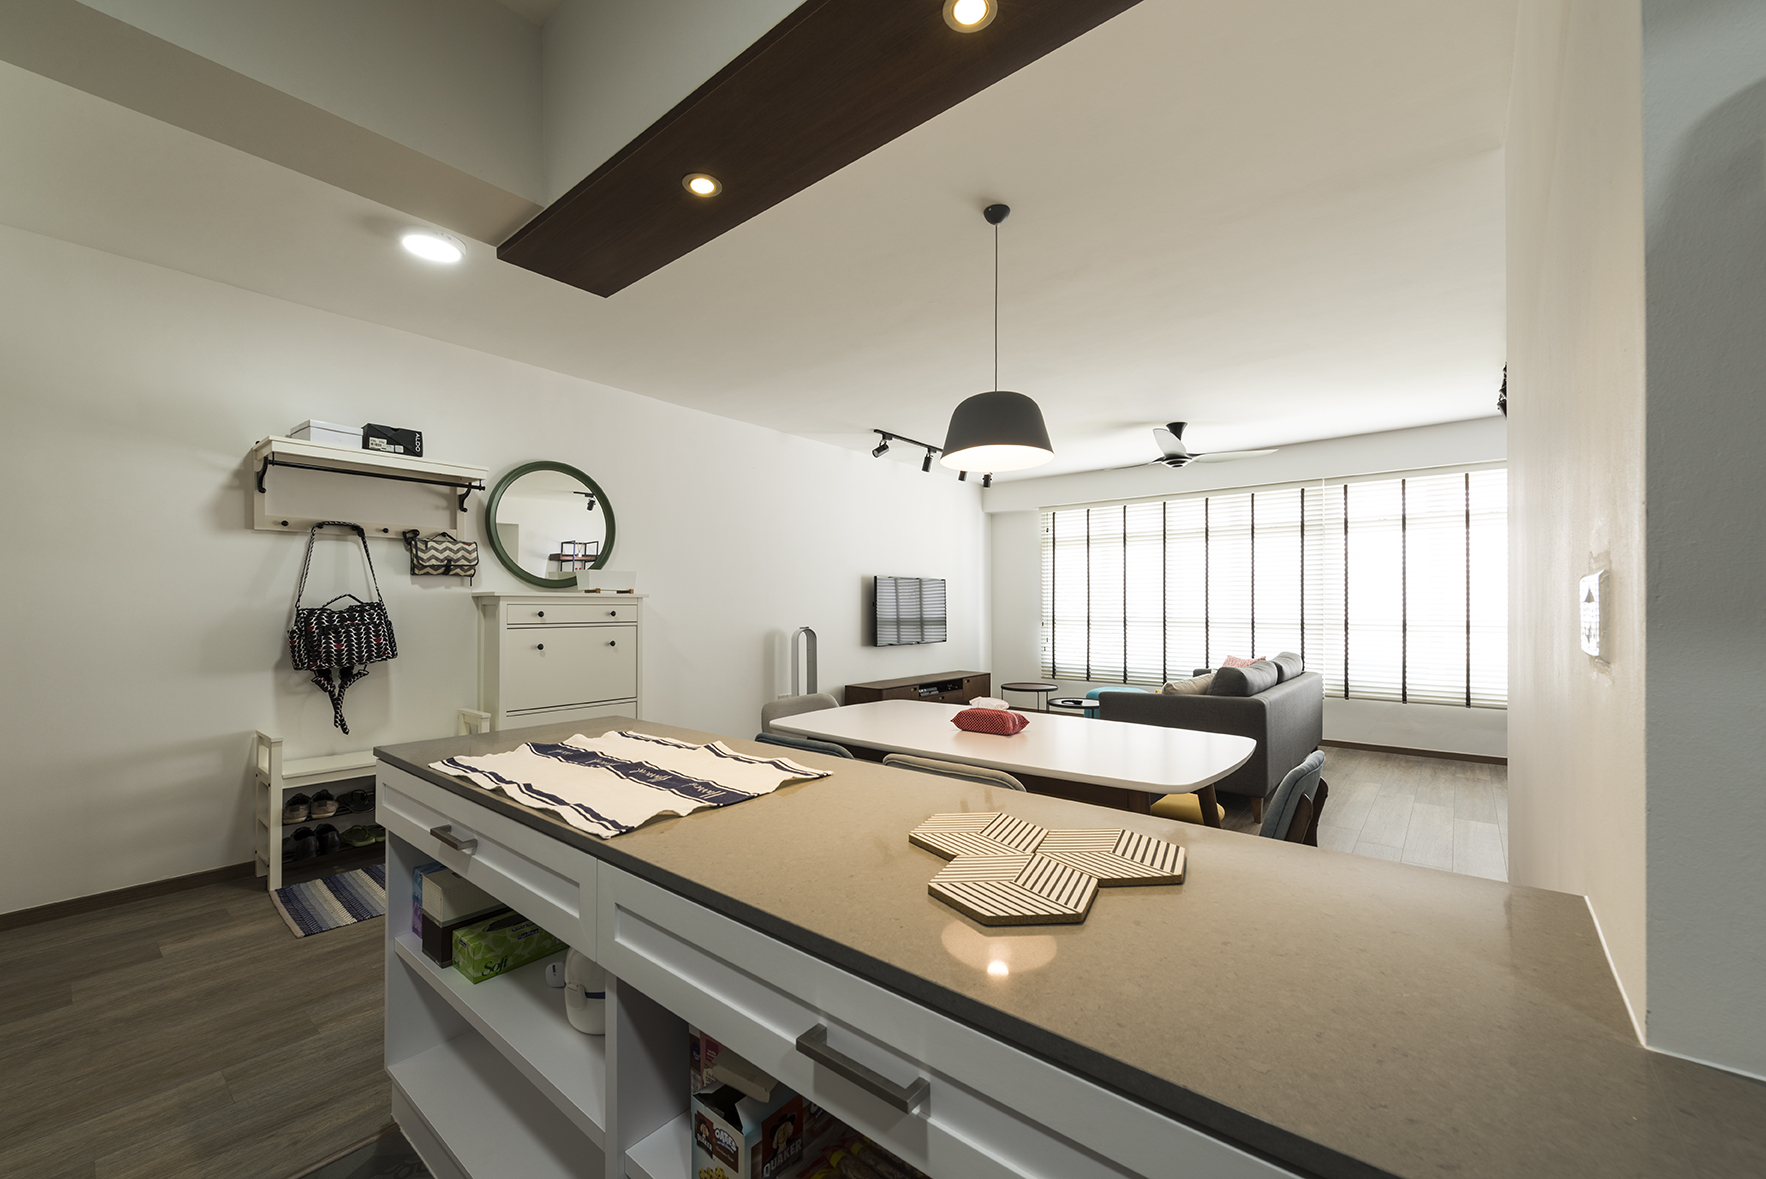 Country, Minimalist, Rustic Design - Kitchen - HDB 5 Room - Design by TBG Interior Design